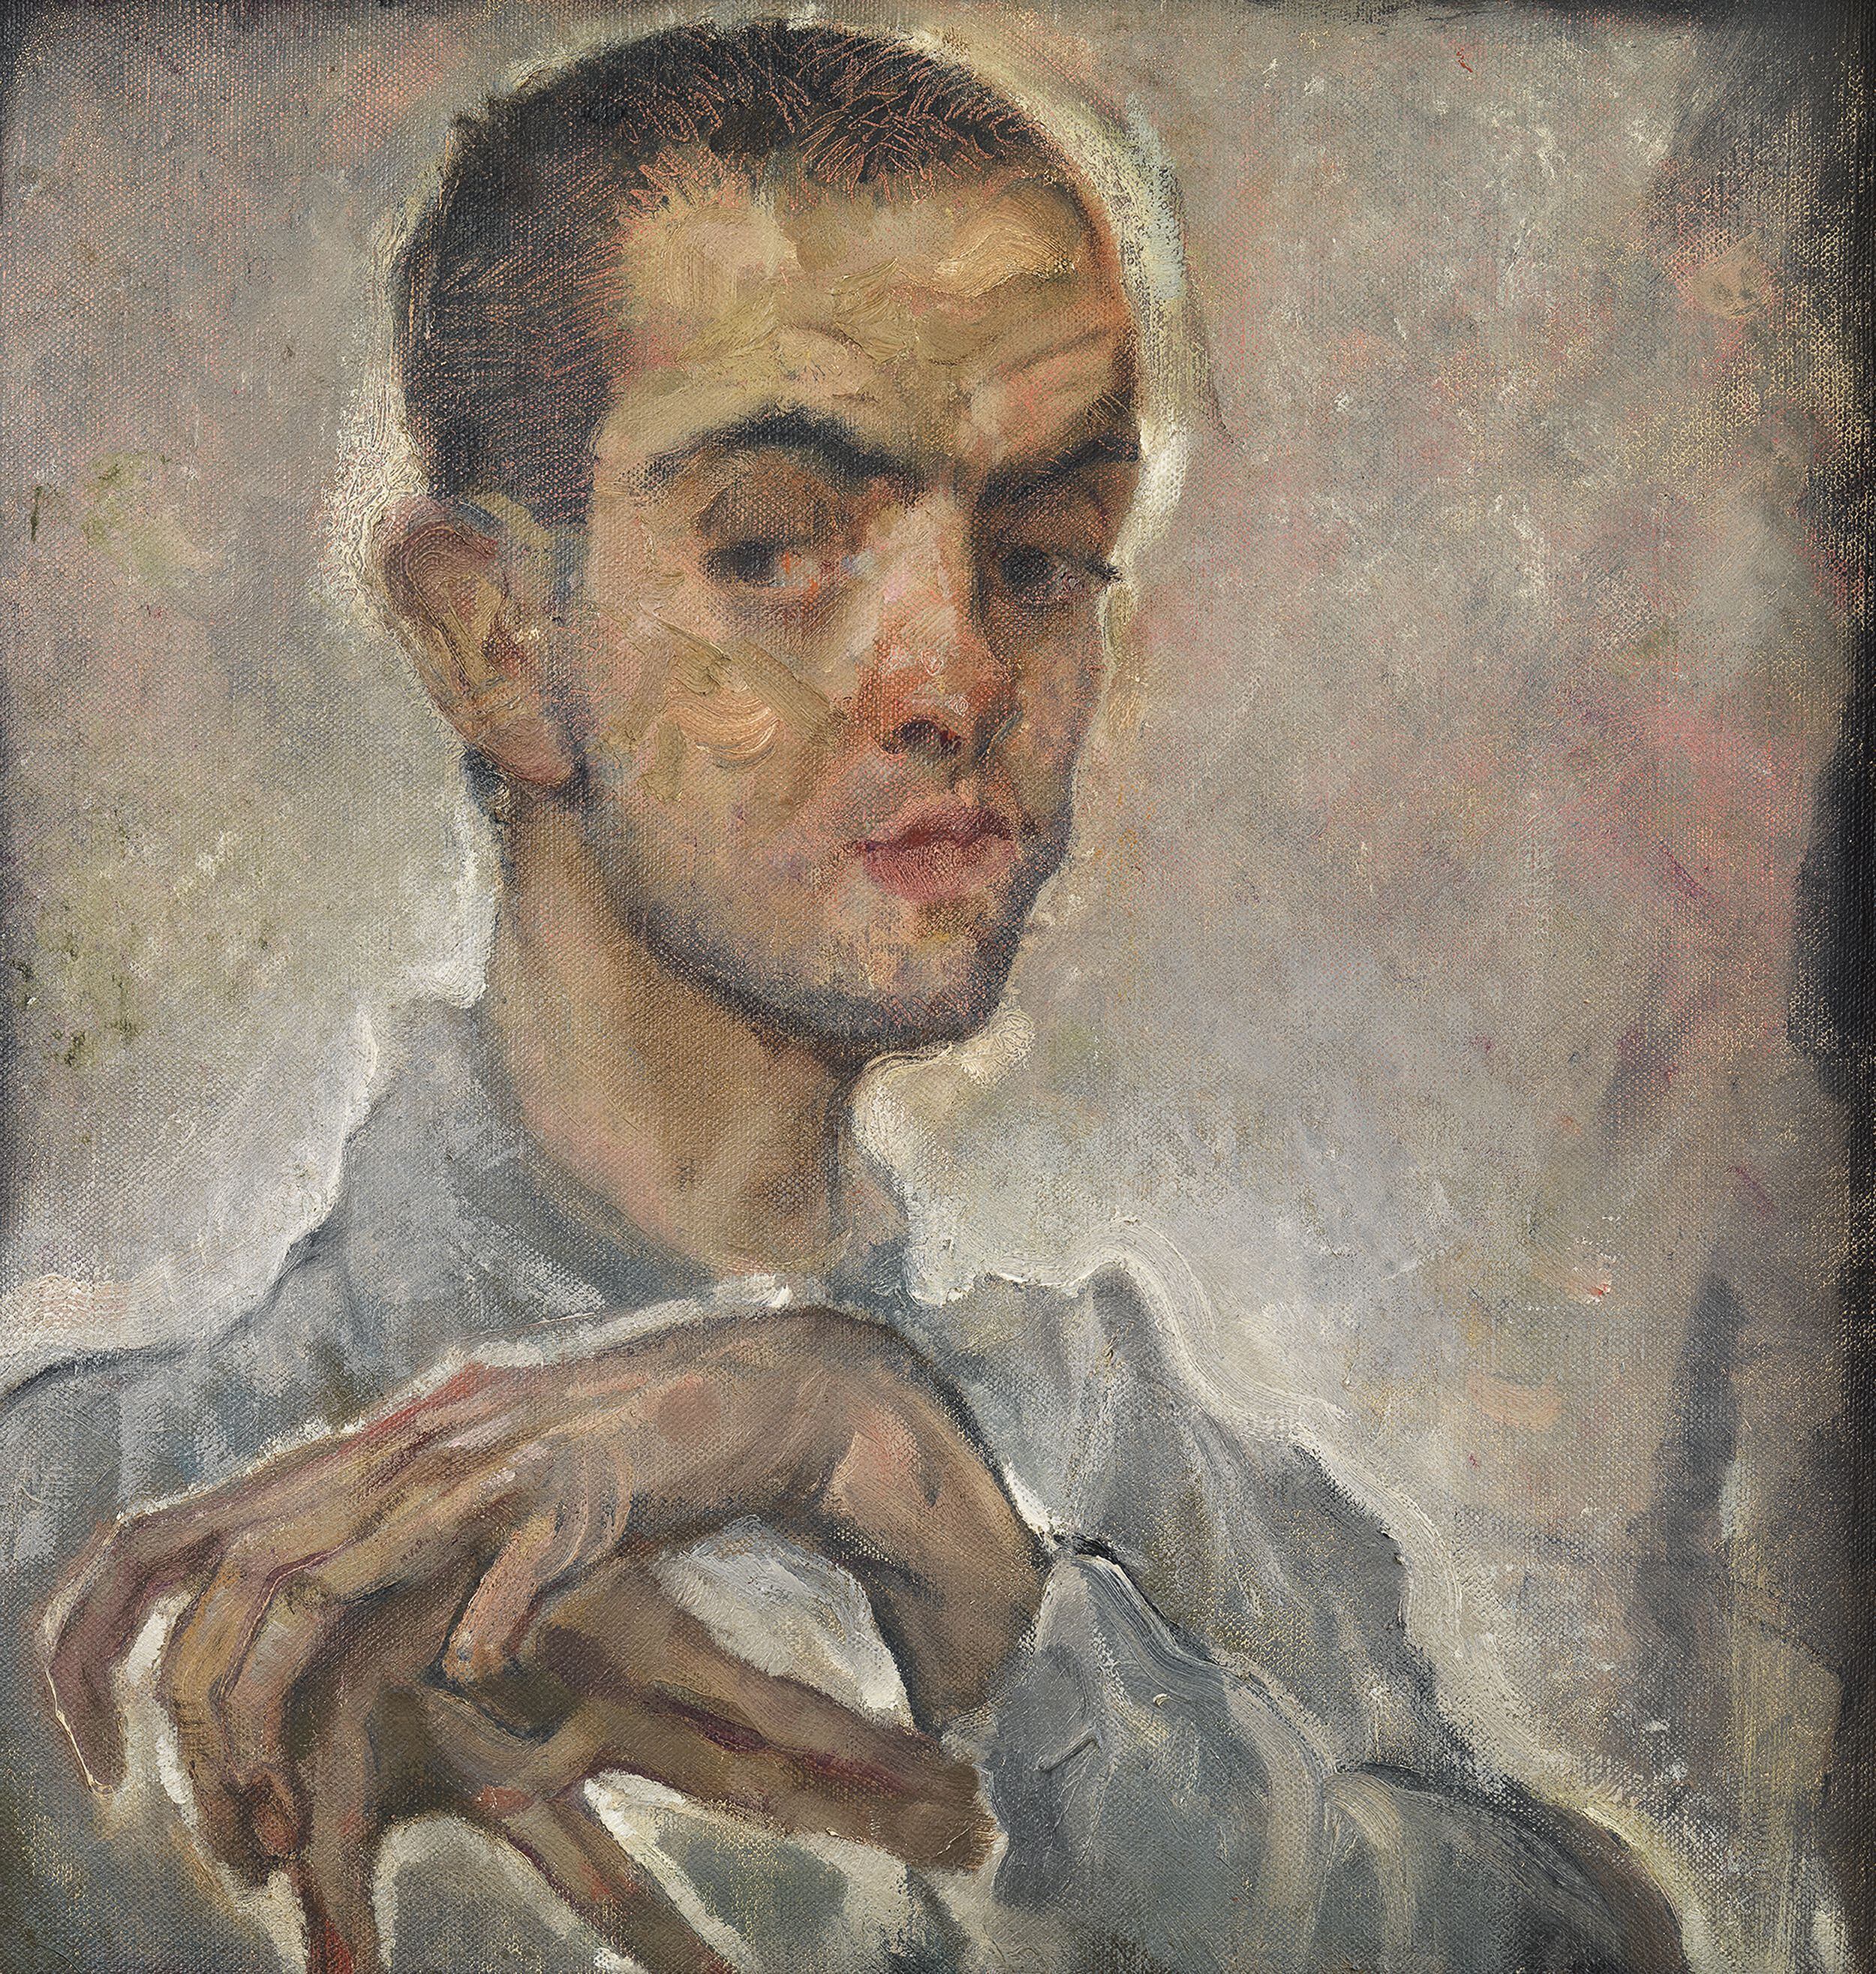 'Retrato de Egon Schiele' (1910), por Max Oppenheimer.